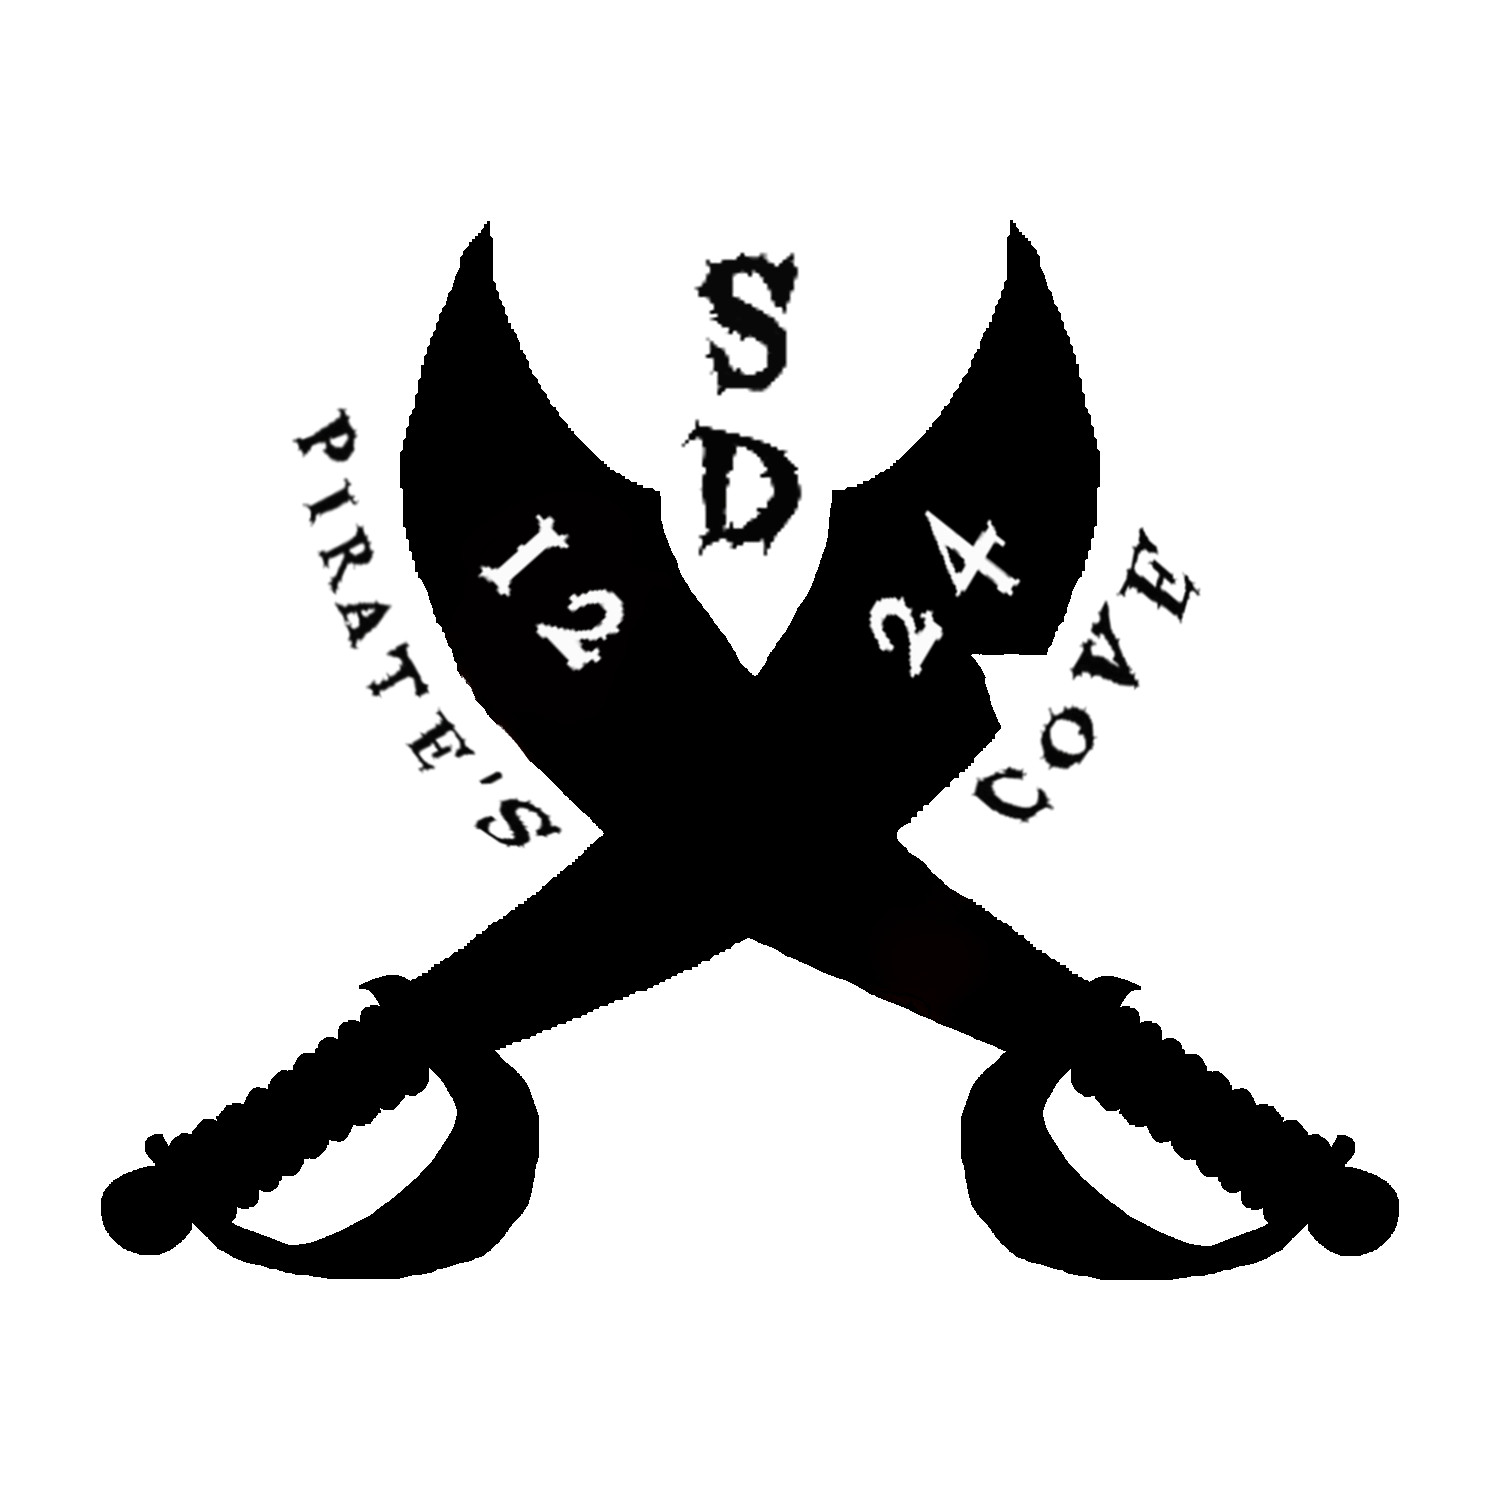 San Diego Pirate’s Cove 6, 12 & 24 hour Run & Walk logo on RaceRaves